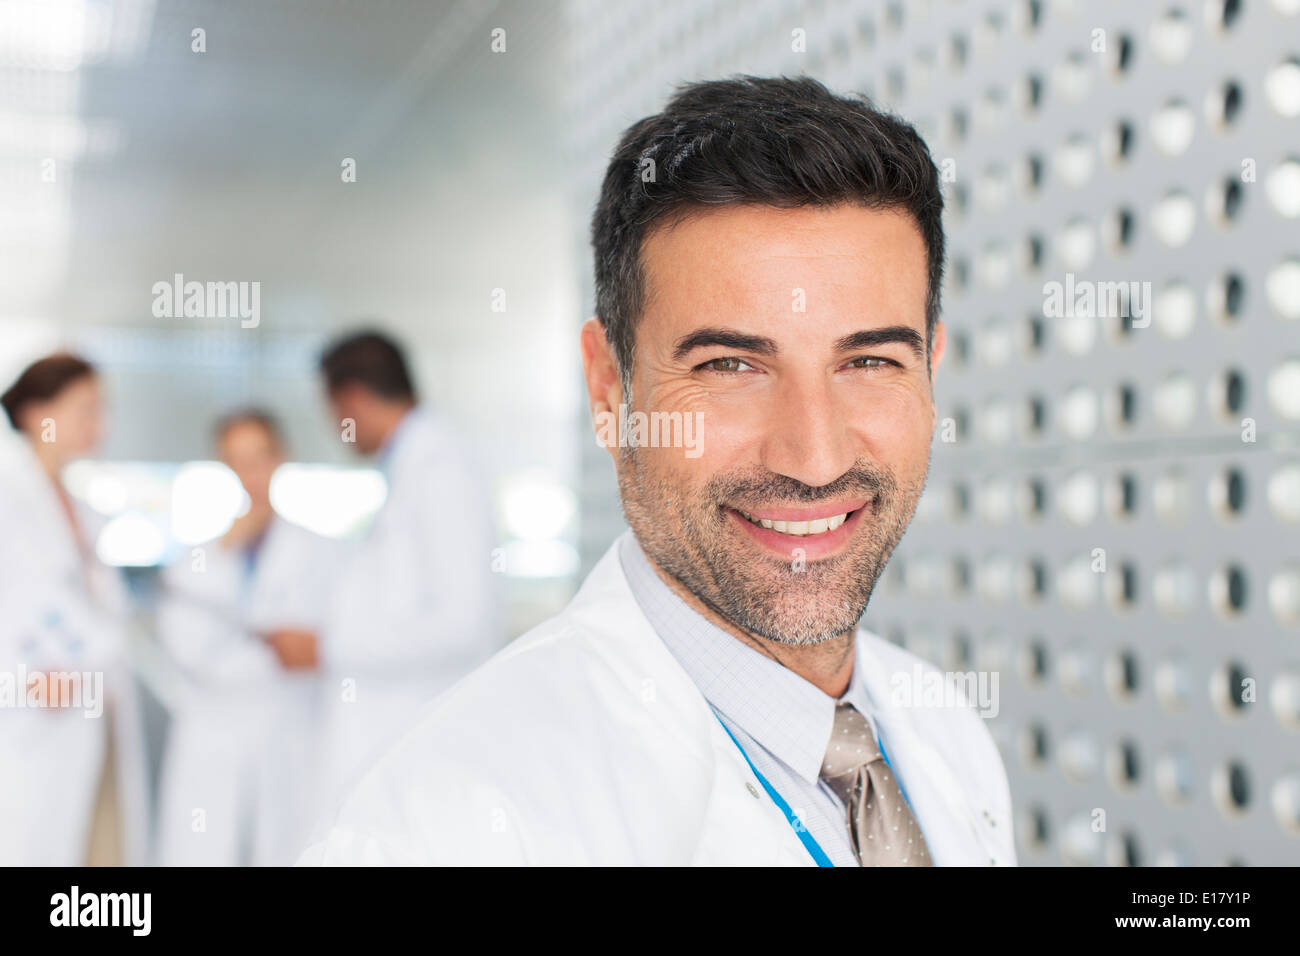 Portrait of smiling doctor Banque D'Images